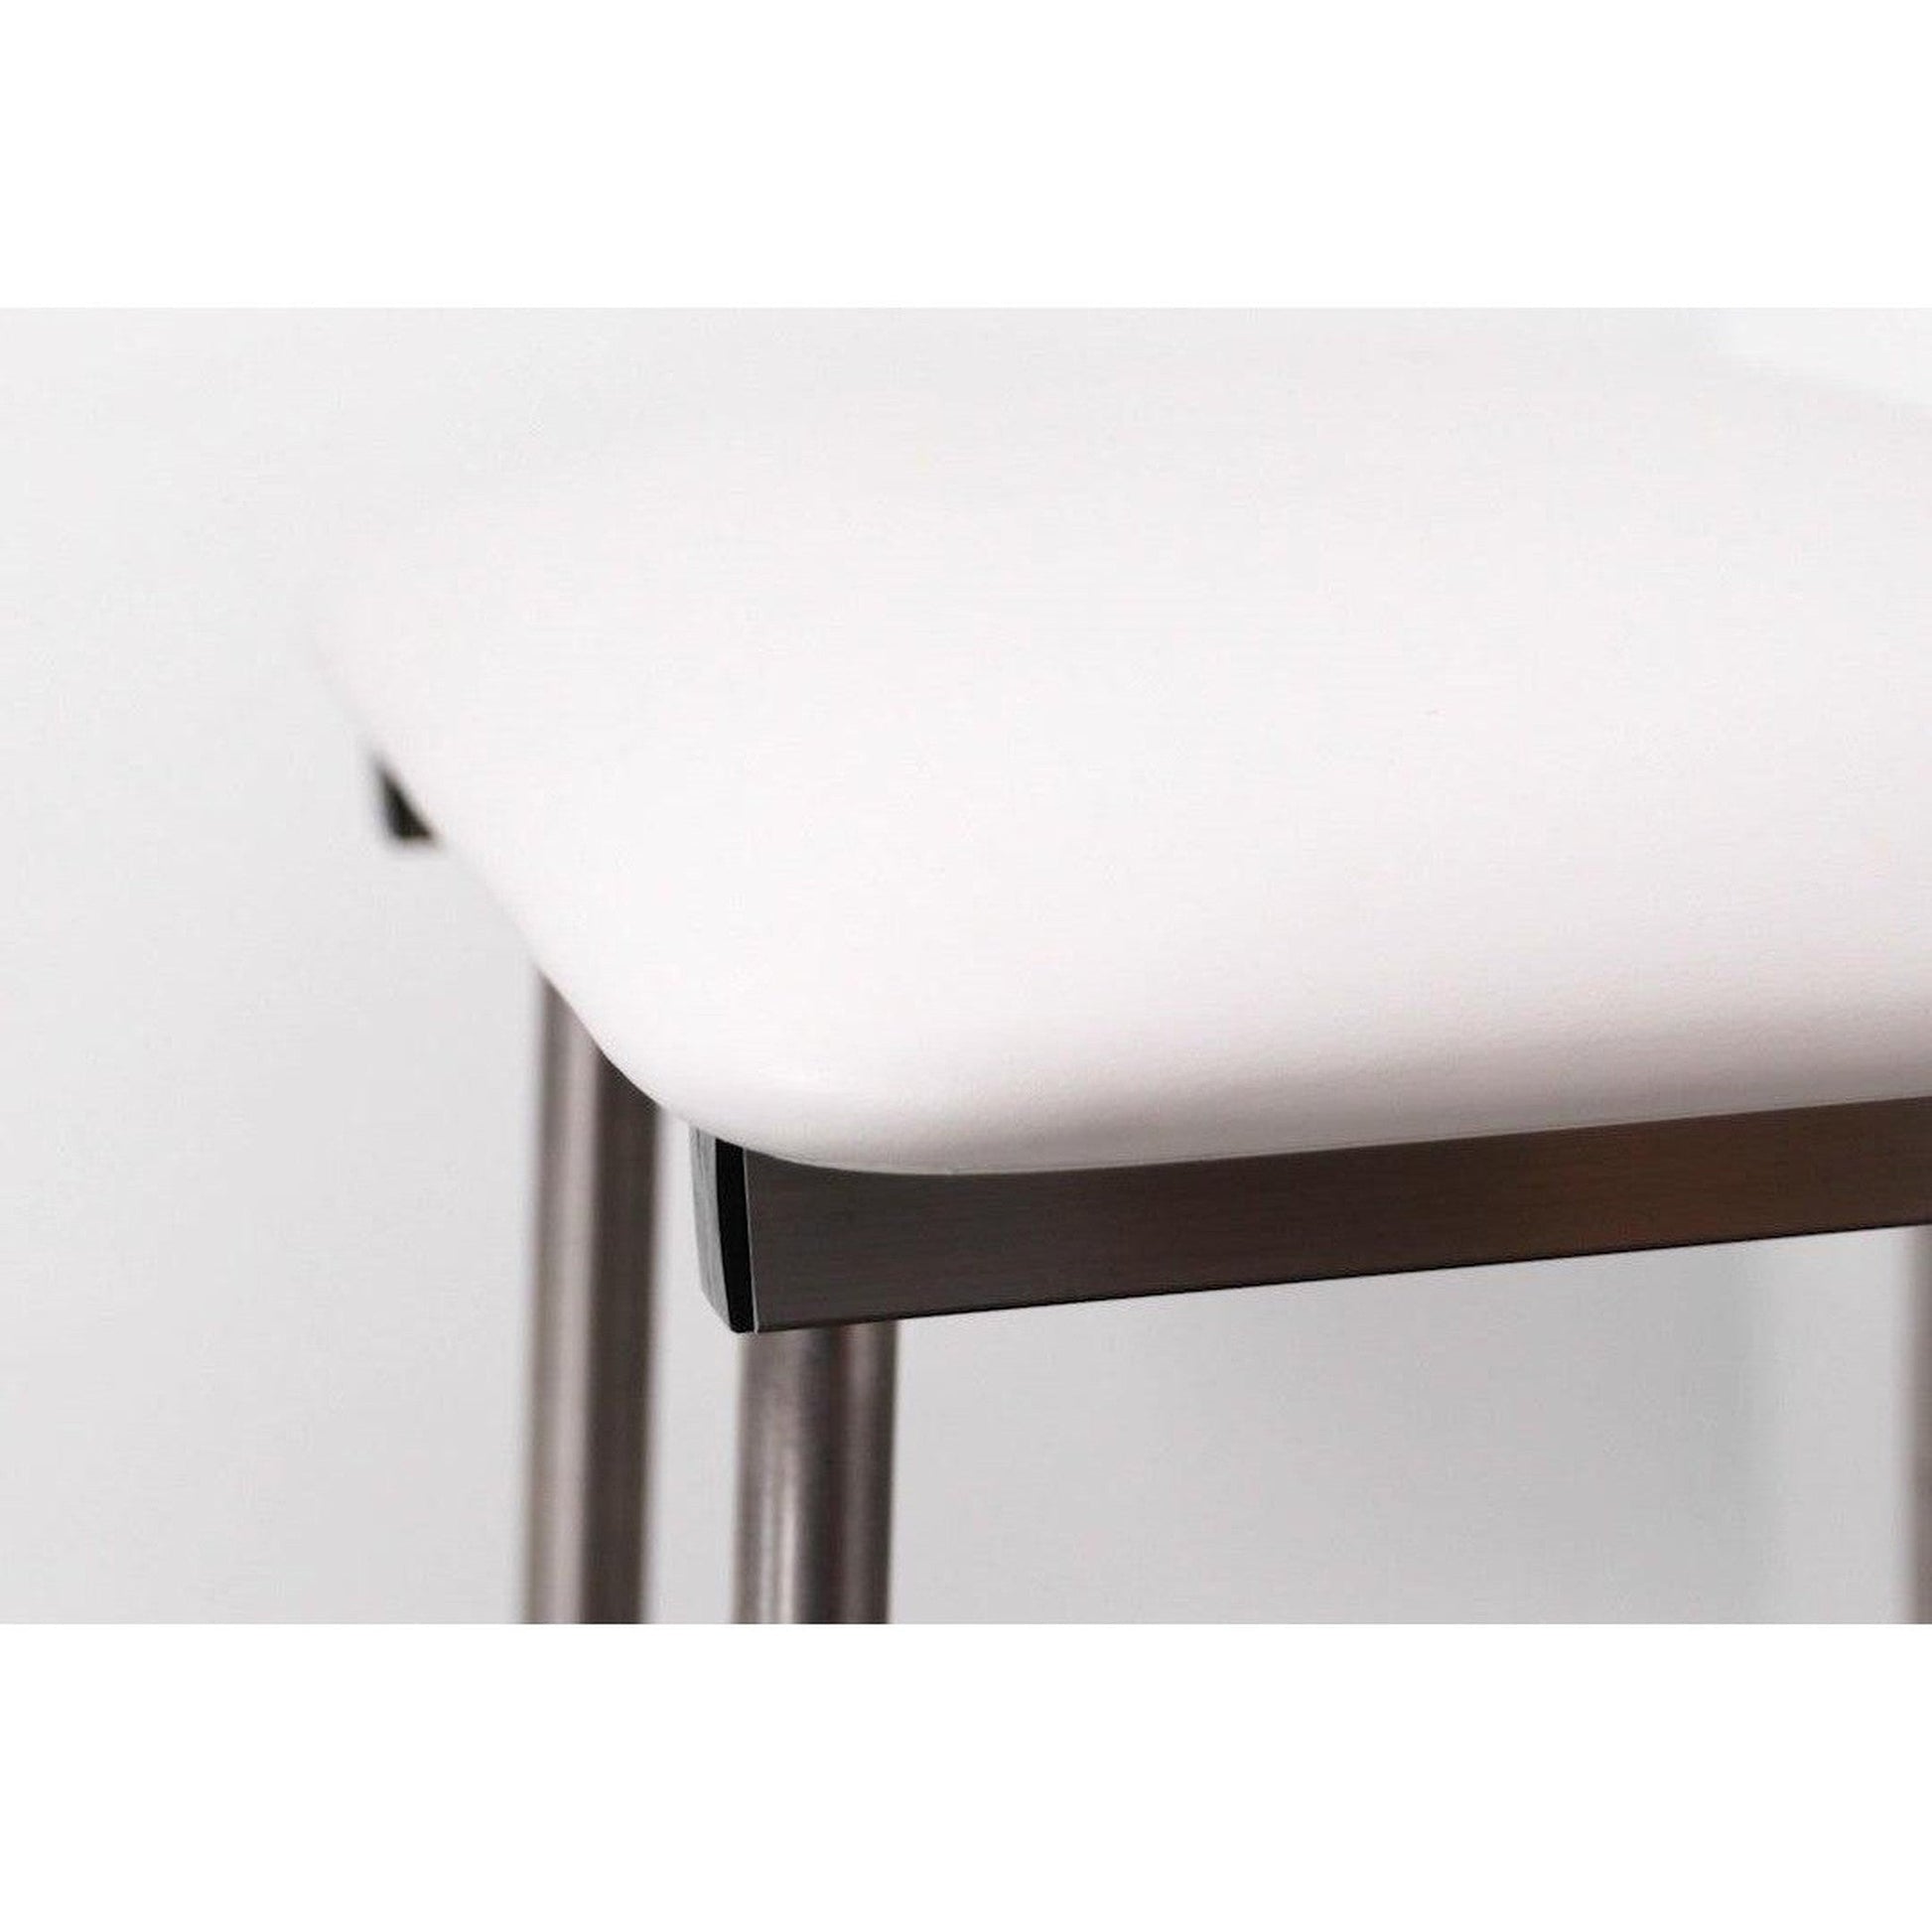 Seachrome Signature Series 48" W x 24" D Naugahyde White Cushion Seat Top Bench Shower Seat With Swing-Down Legs